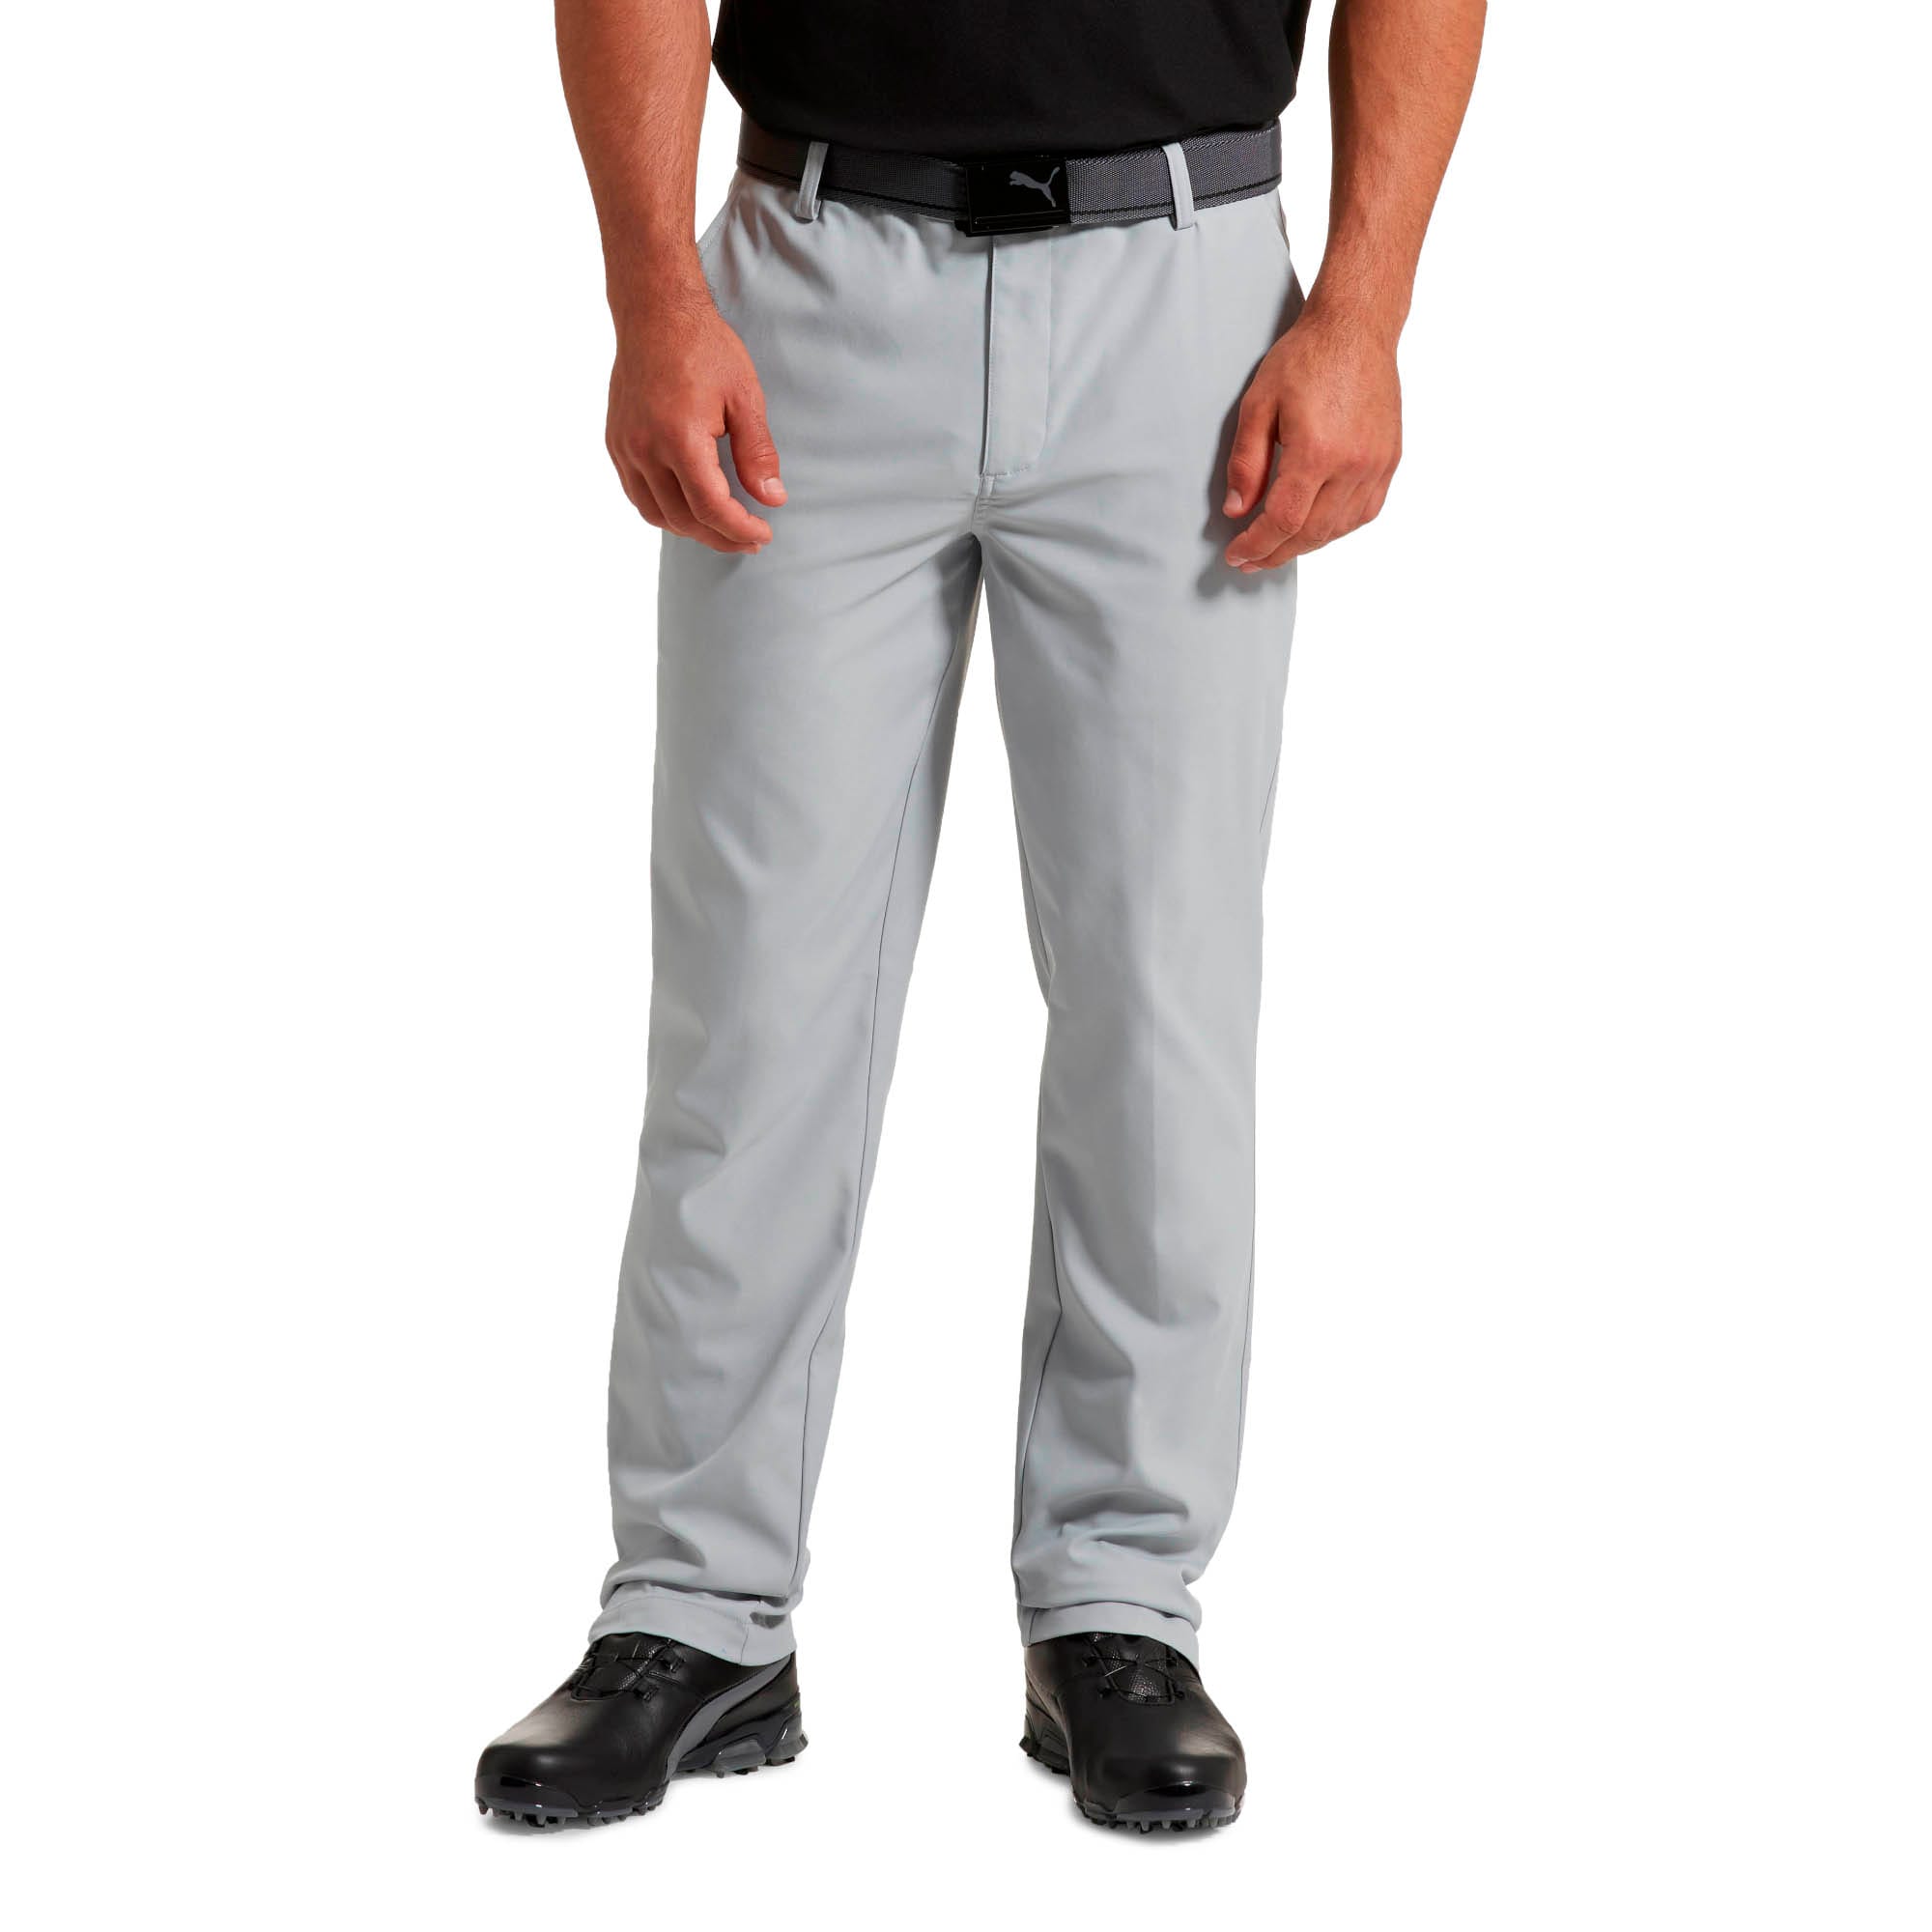 puma essential pounce golf shorts